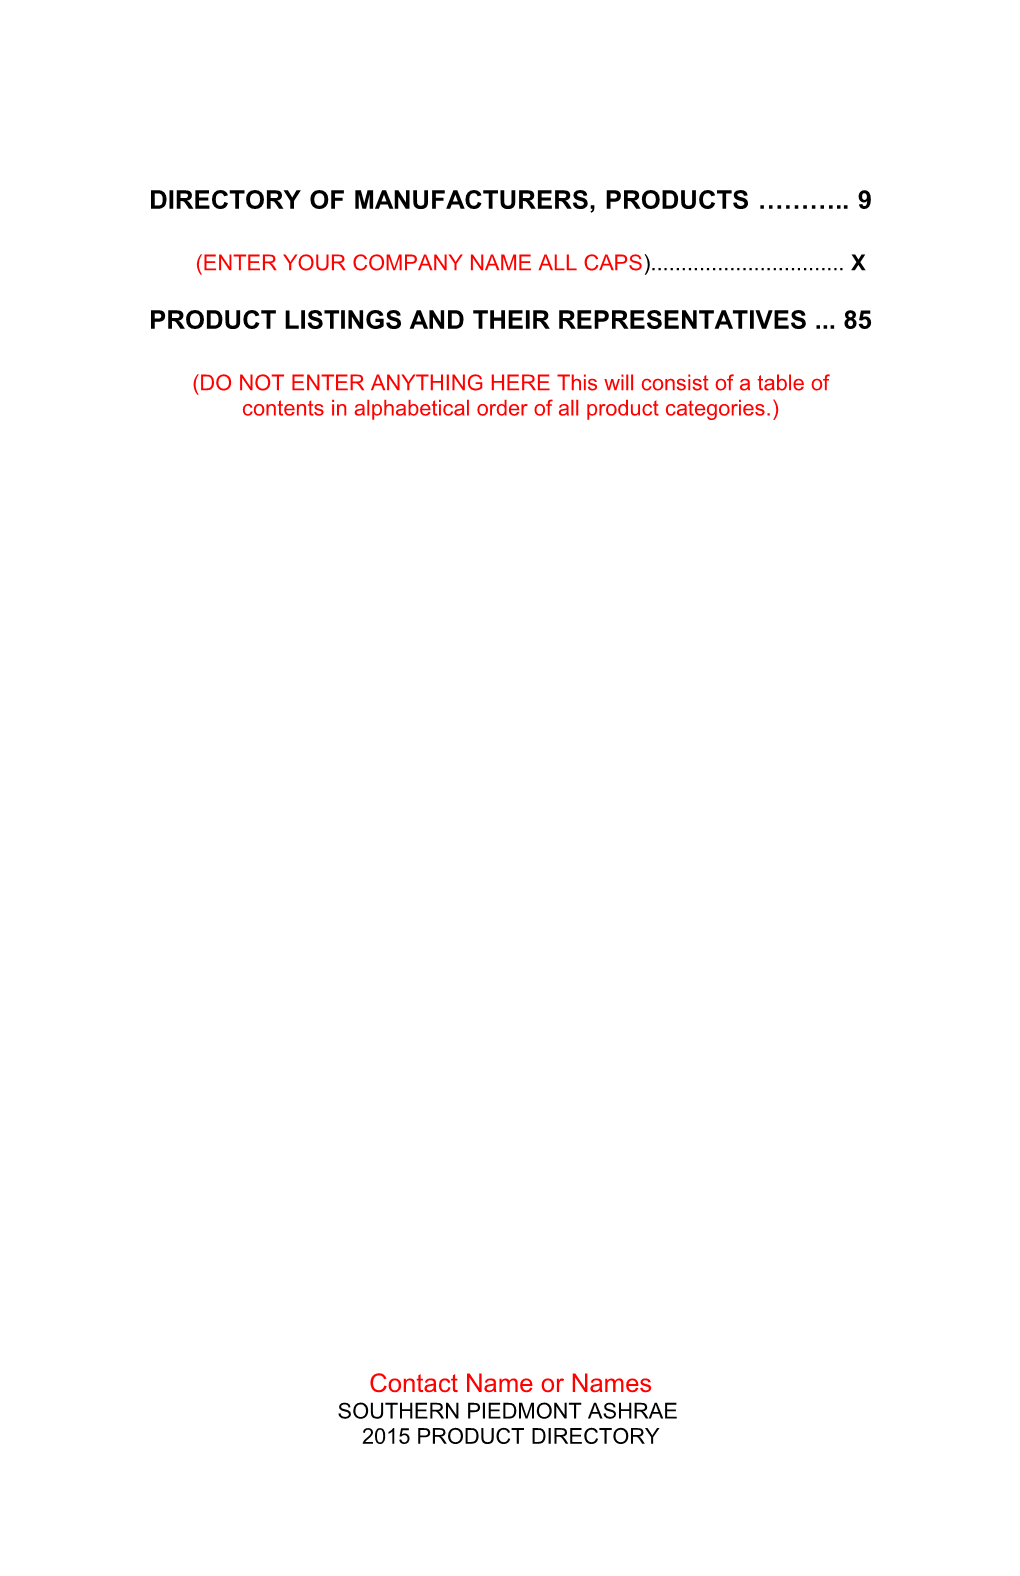 Ashrae Long Island Chapter 2009-2010 Product Directory